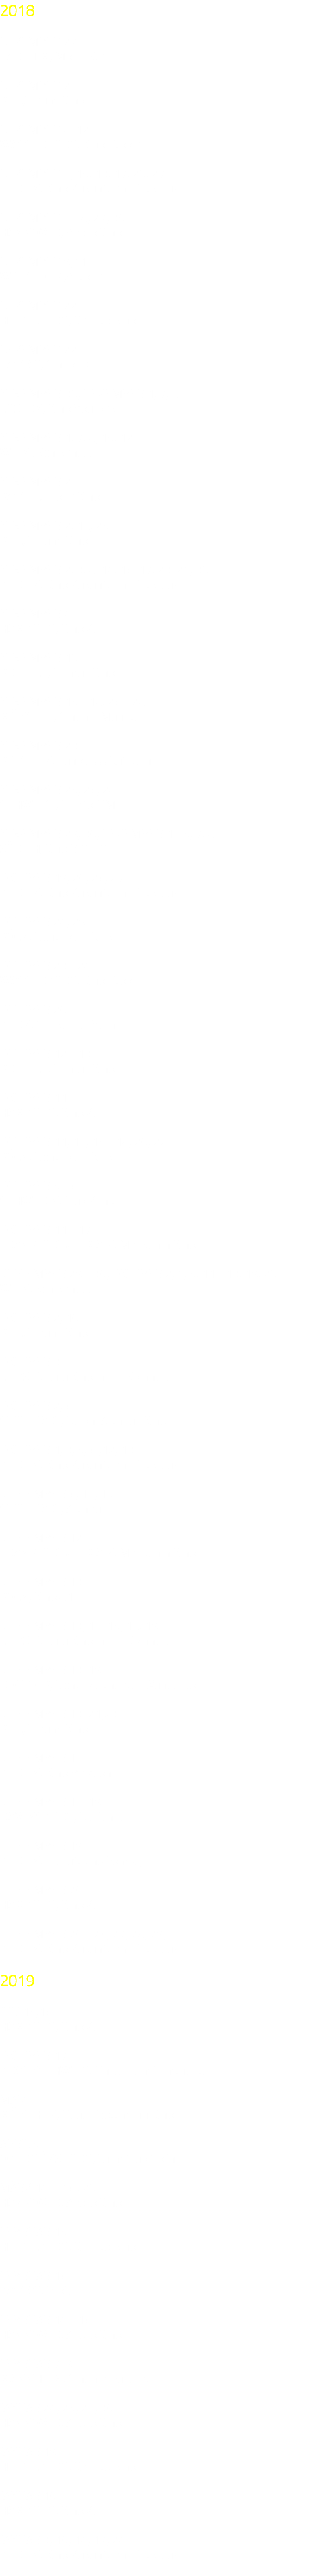 2018 DEZEMBER 2,4 PARCHIM, Movie Star DEZEMBER 2 KIEL,Traum-Kino DEZEMBER 4, 12 WASSERBURG, Kino Utopia DEZEMBER 6, 10, 13, 17, 20, 27 BERLIN, Kino Zukunft am Ostkreuz DEZEMBER 6 - 8, 27, 30 HANNOVER, Apollo Kino DEZEMBER 9,11 WITTSTOCK ,Astoria DEZEMBER 22 HEIDELBERG, Karlstorkino DEZEMBER 22 PASSAU, Cineplex NOVEMBER 30, DEZEMBER 1, 7, 8 LUZERN, Kino Bourbaki NOVEMBER 1, 7, 8, 10, 12 Wien, Schikaneder NOVEMBER 2 KASSEL, Gloria Kino NOVEMBER 2, 18, 25 KIEL, Traum-Kino NOVEMBER 2, 3, 8-14, 16-17, 23-24, 30 BERLIN, Kino Zukunft am Ostkreuz NOVEMBER 4 HAMBURG, Kino Zeise NOVEMBER 10 KREFELD, Primus Kino NOVEMBER 15 - 18, 26 - 28 MÜNSTER, Cinema Münster NOVEMBER 23 KUFSTEIN, Funplexxx Kufstein NOVEMBER 25, 26, 28 SCHWEDT , FilmforUM NOVEMBER 29, 30, DEZEMBER 1 - 5, 7, 8 ZÜRICH, Kino Riffraff OKTOBER 19, 20, 26, 27 BERLIN, Kino Zukunft am Ostkreuz OCTOBER 24, 29 KÖLN, Lichtspiele Kalk OCTOBER 23 - 24 WASSERBURG, Kino Utopia OCTOBER 20 BERN, Gaskessel Bern OCTOBER 12 - 13 KREFELD, Primus Kino OKTOBER 11 HAMBURG, Kino Zeise OCTOBER 11, 13, 15 - 18, 20, 22 KÖLN, Lichtspiele Kalk OCTOBER 5 - 6 SCHWERIN, Club Zenit OKTOBER 11 - 17 FRANKFURT am MAIN, Mal Seh'n Kino SEPTEMBER 29 - 30, OKTOBER 2, 4, 5, 11 - 13, 19, 20 WIEN, Schikaneder OKTOBER 2, 10 KIEL, Traum-Kino OKTOBER 3 LEIPZIG, Luru Kino in der Spinnerei OKTOBER 2, 6 STUTTGART, Delphi Arthaus Kino OKTOBER 1, 3, 5, 6 ,12, 13 BERLIN, Kino Zukunft am Ostkreuz SEPTEMBER 6, 14, 15 STUTTGART, Arthaus SEPTEMBER 12 FRANKFURT am MAIN, Mal Seh’n Kino SEPTEMBER 13 KÖLN, Kino 813 SEPTEMBER 13, 14-15, 18, 19 LEIPZIG, Luru Kino in der Spinnerei SEPTEMBER 13-19 ROSTOCK, Lichtspieltheater Wundervoll SEPTEMBER 13-21,23 KIEL, Traum-Kino SEPTEMBER 14 BERLIN, Kino Babylon SEPTEMBER 16-19 RAVENSBURG, Die Linse SEPTEMBER 19 BERLIN, Freiluftkino Pompeji SEPTEMBER 20 HAMBURG, Kino Zeise SEPTEMBER 20 - 26, 27, 28, 29, BERLIN, Kino Zukunft am Ostkreuz 2019 JULI 15,16 HAMBURG, Kino Zeise OKTOBER 17 BRAUNSCHWEIG, Universum Filmtheater MAI 4 MÜNCHEN, Neues Rottmann Kino APRIL 5 Obergünzburg, Turm Club Go In MÄRZ 14. - 16., 20 HANNOVER, Apollo Kino FEBRUAR 15 HEIDELBERG, Karlstorkino FEBRUAR 16 PASSAU, ProLi FEBRUAR 14 - 16 HANNOVER, Apollo Kino FEBRUAR 7-9 MANNHEIM, Cinema Quadrat JANUAR 24, 25, 26, 30 HANNOVER, Apollo Kino JANUAR 19 HEIDELBERG, Karlstorkino JANUAR 10 HAMBURG, Kino Zeise JANUAR 3, 10, 14, 17, 24 BERLIN, Kino Zukunft am Ostkreuz 